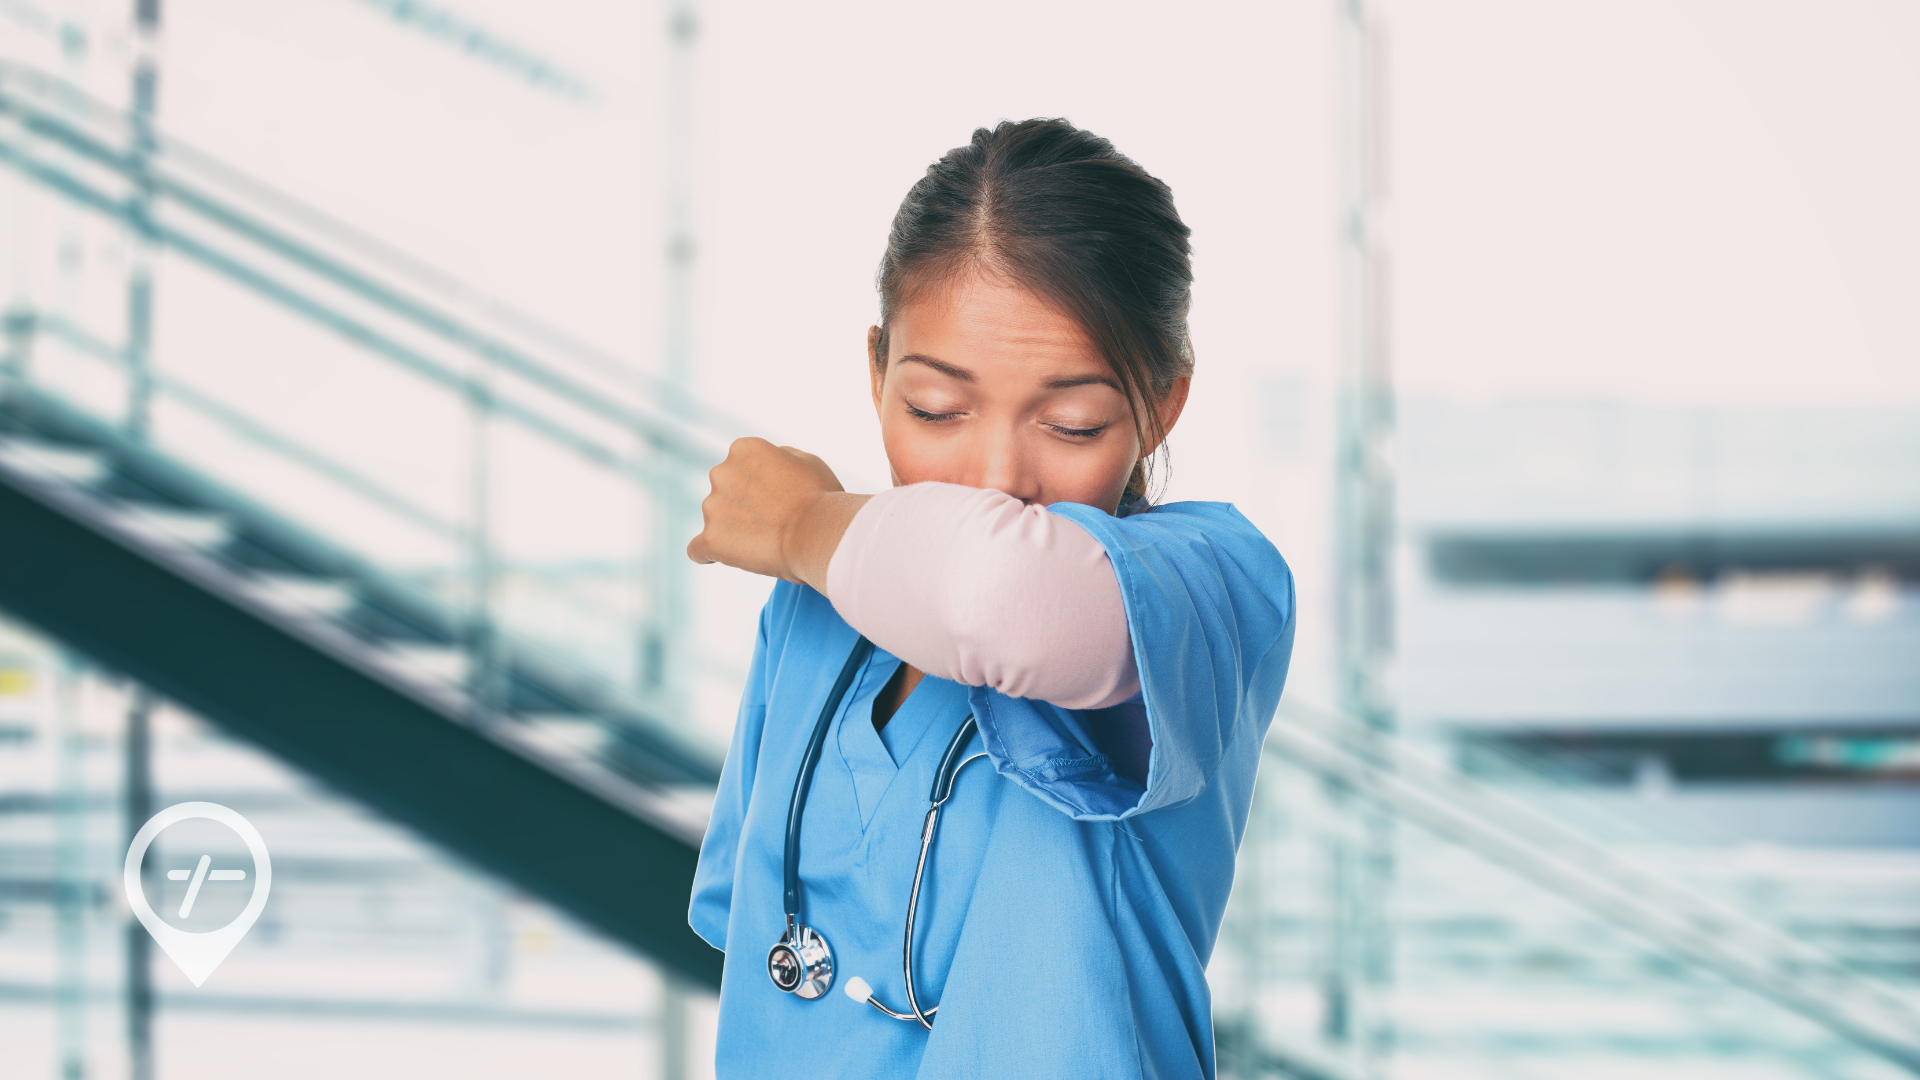 A nurse with seasonal allergies sneezes into her elbow.